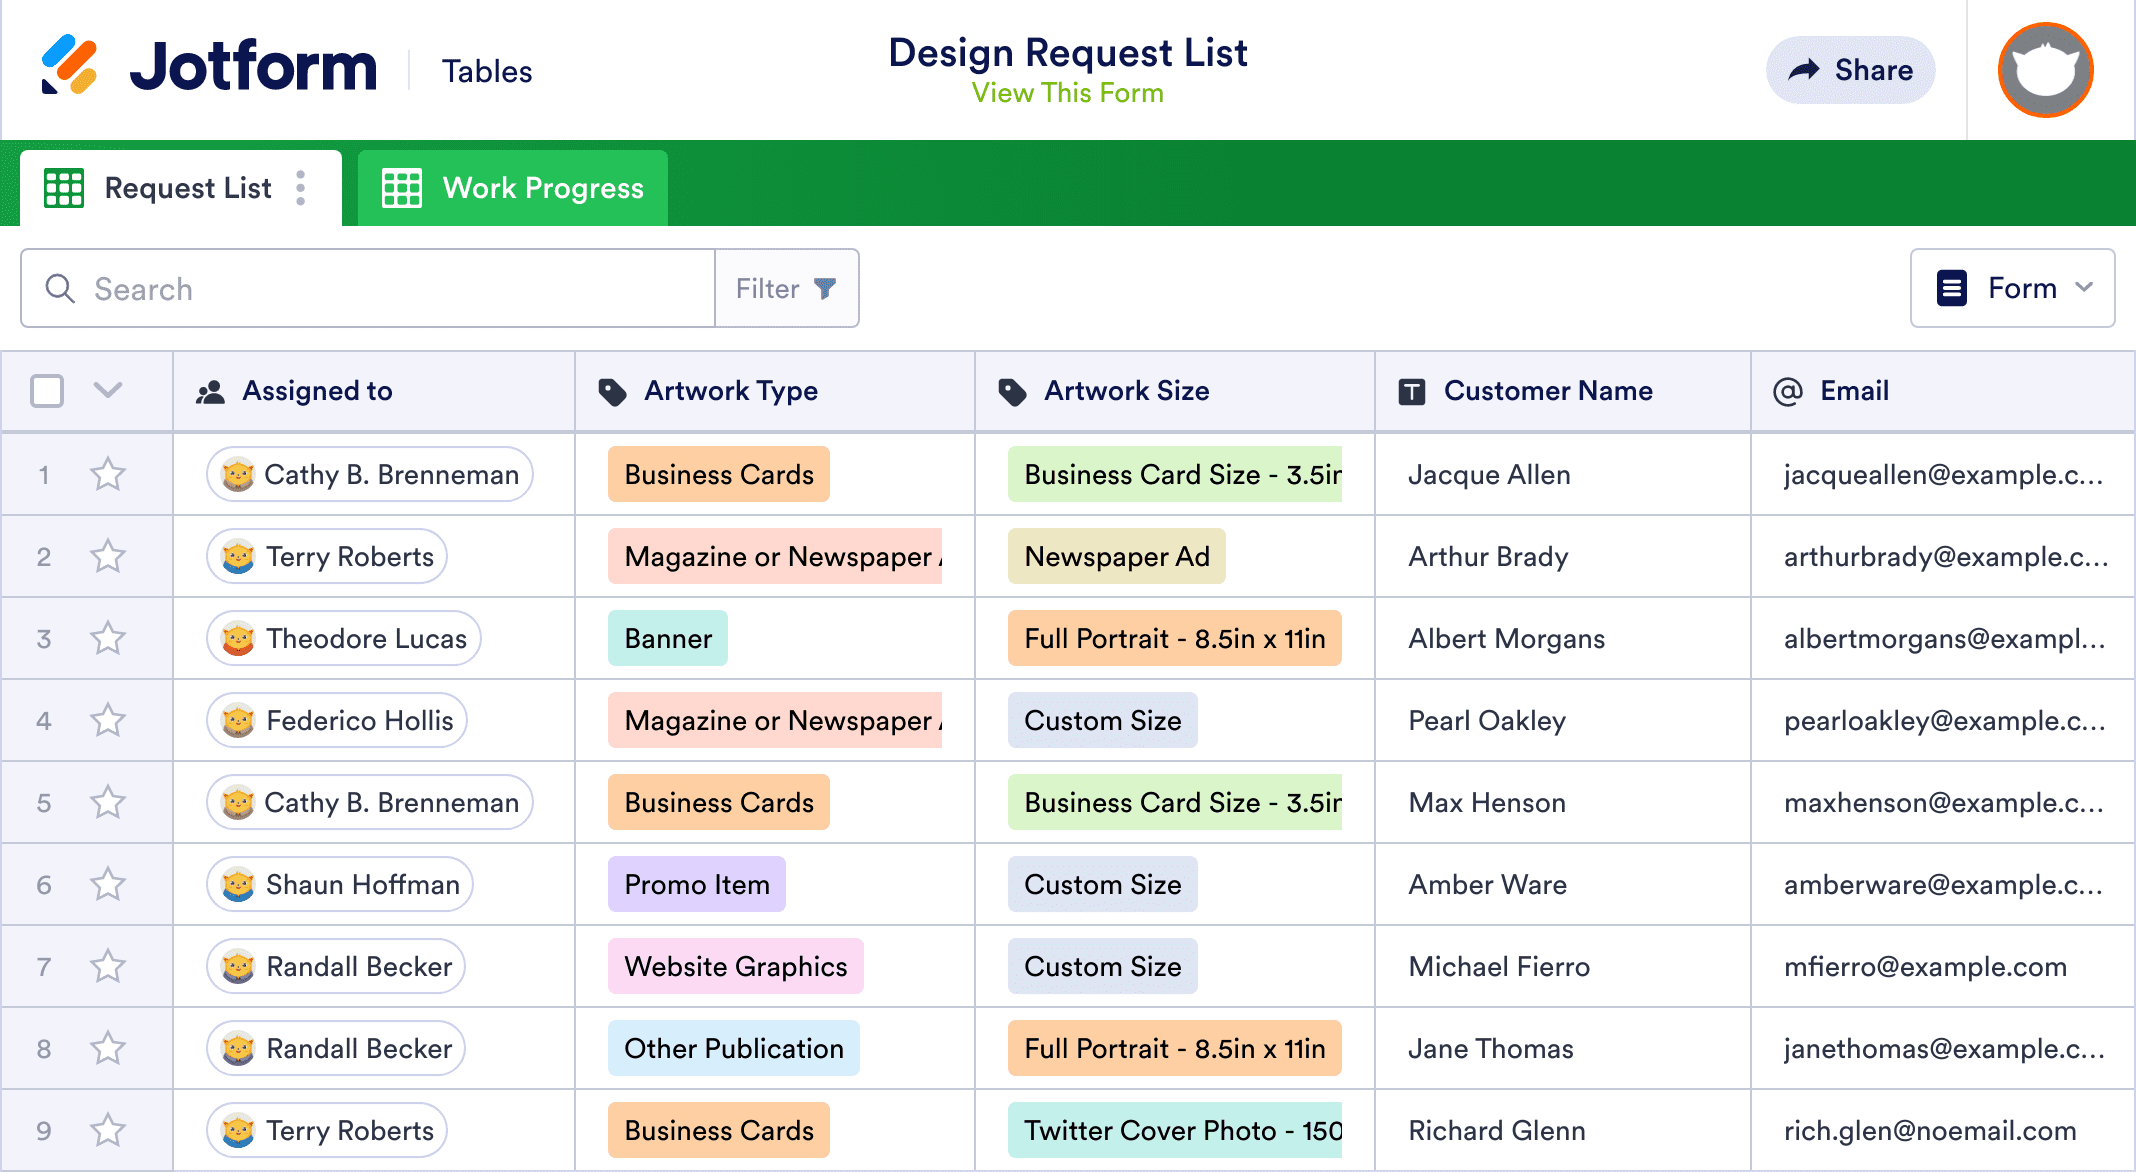 Design Request List